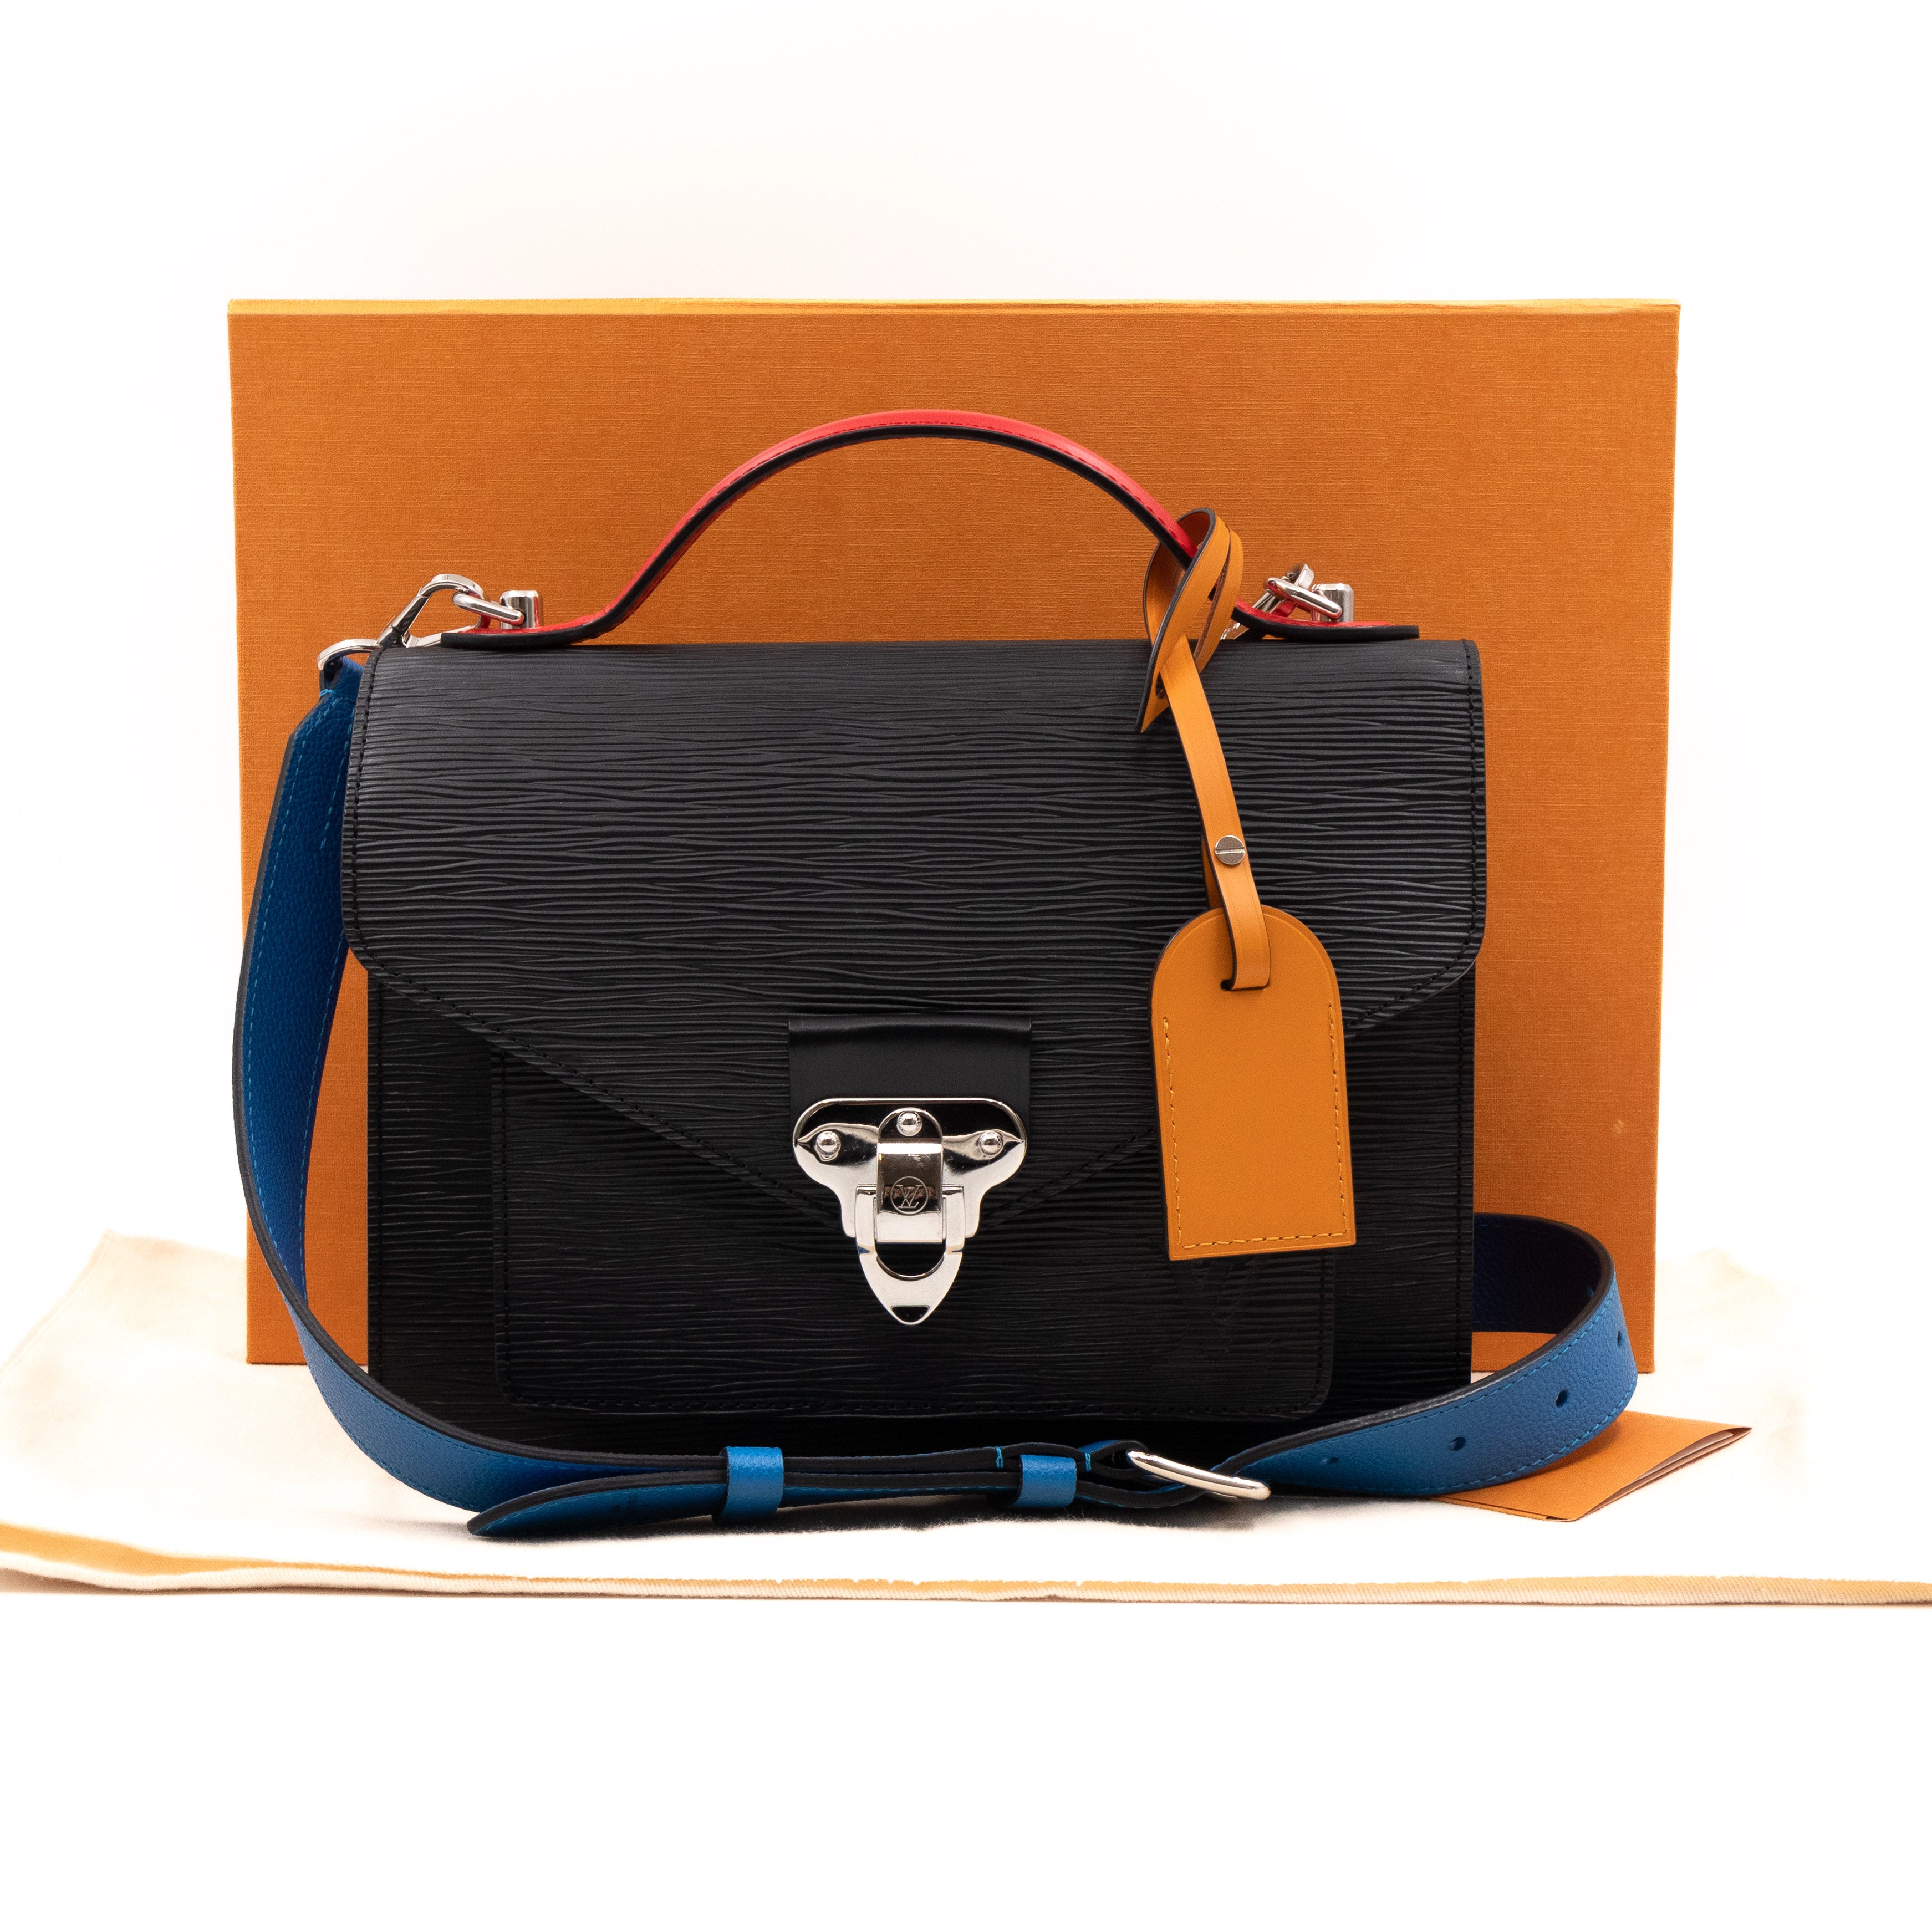 Neo Monceau Epi Leather in Black - Handbags M55403, L*V – ZAK BAGS ©️